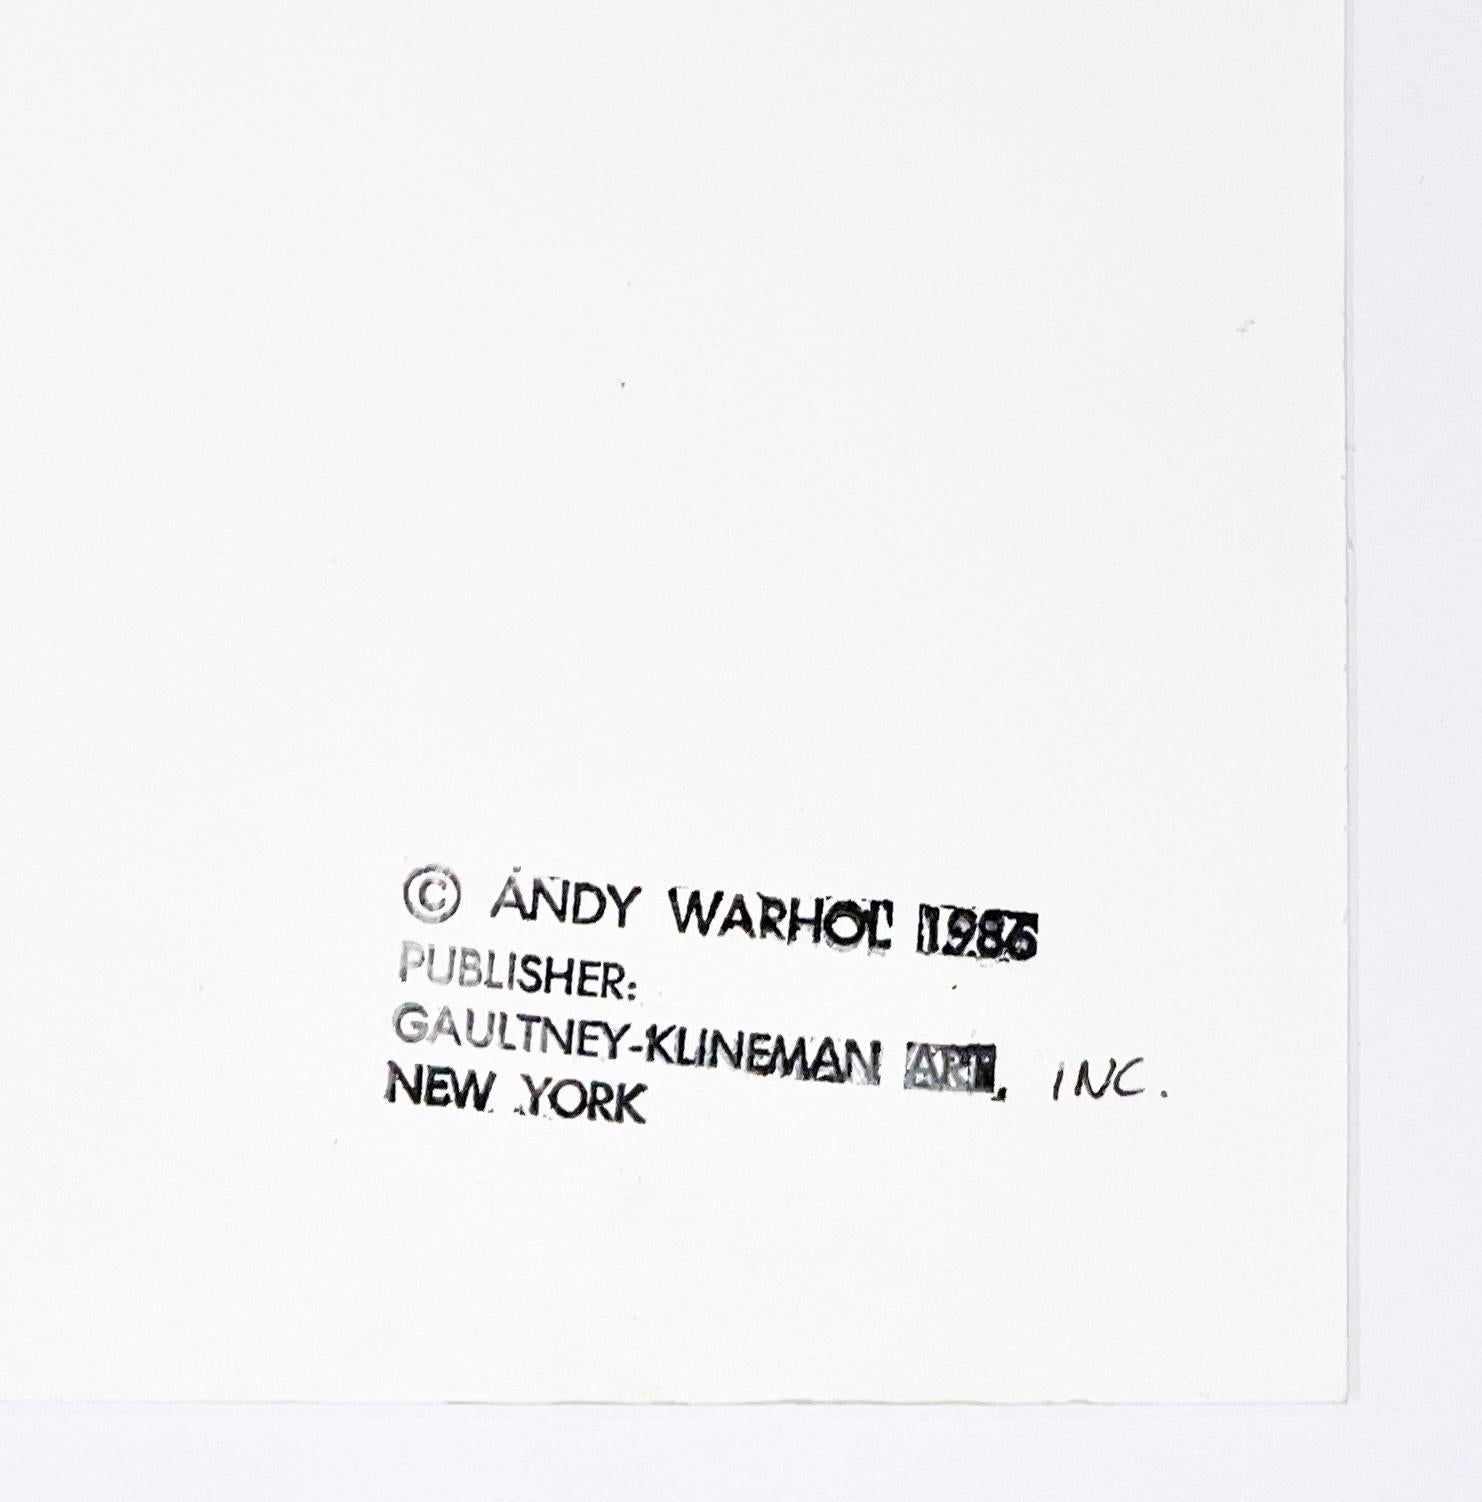 Artist: Andy Warhol
Title: Plains Indian Shield
Portfolio: Cowboys and Indians
Medium: Original screenprint on Lenox Museum Board
Date: 1986
Edition: 196/250
Sheet Size: 36